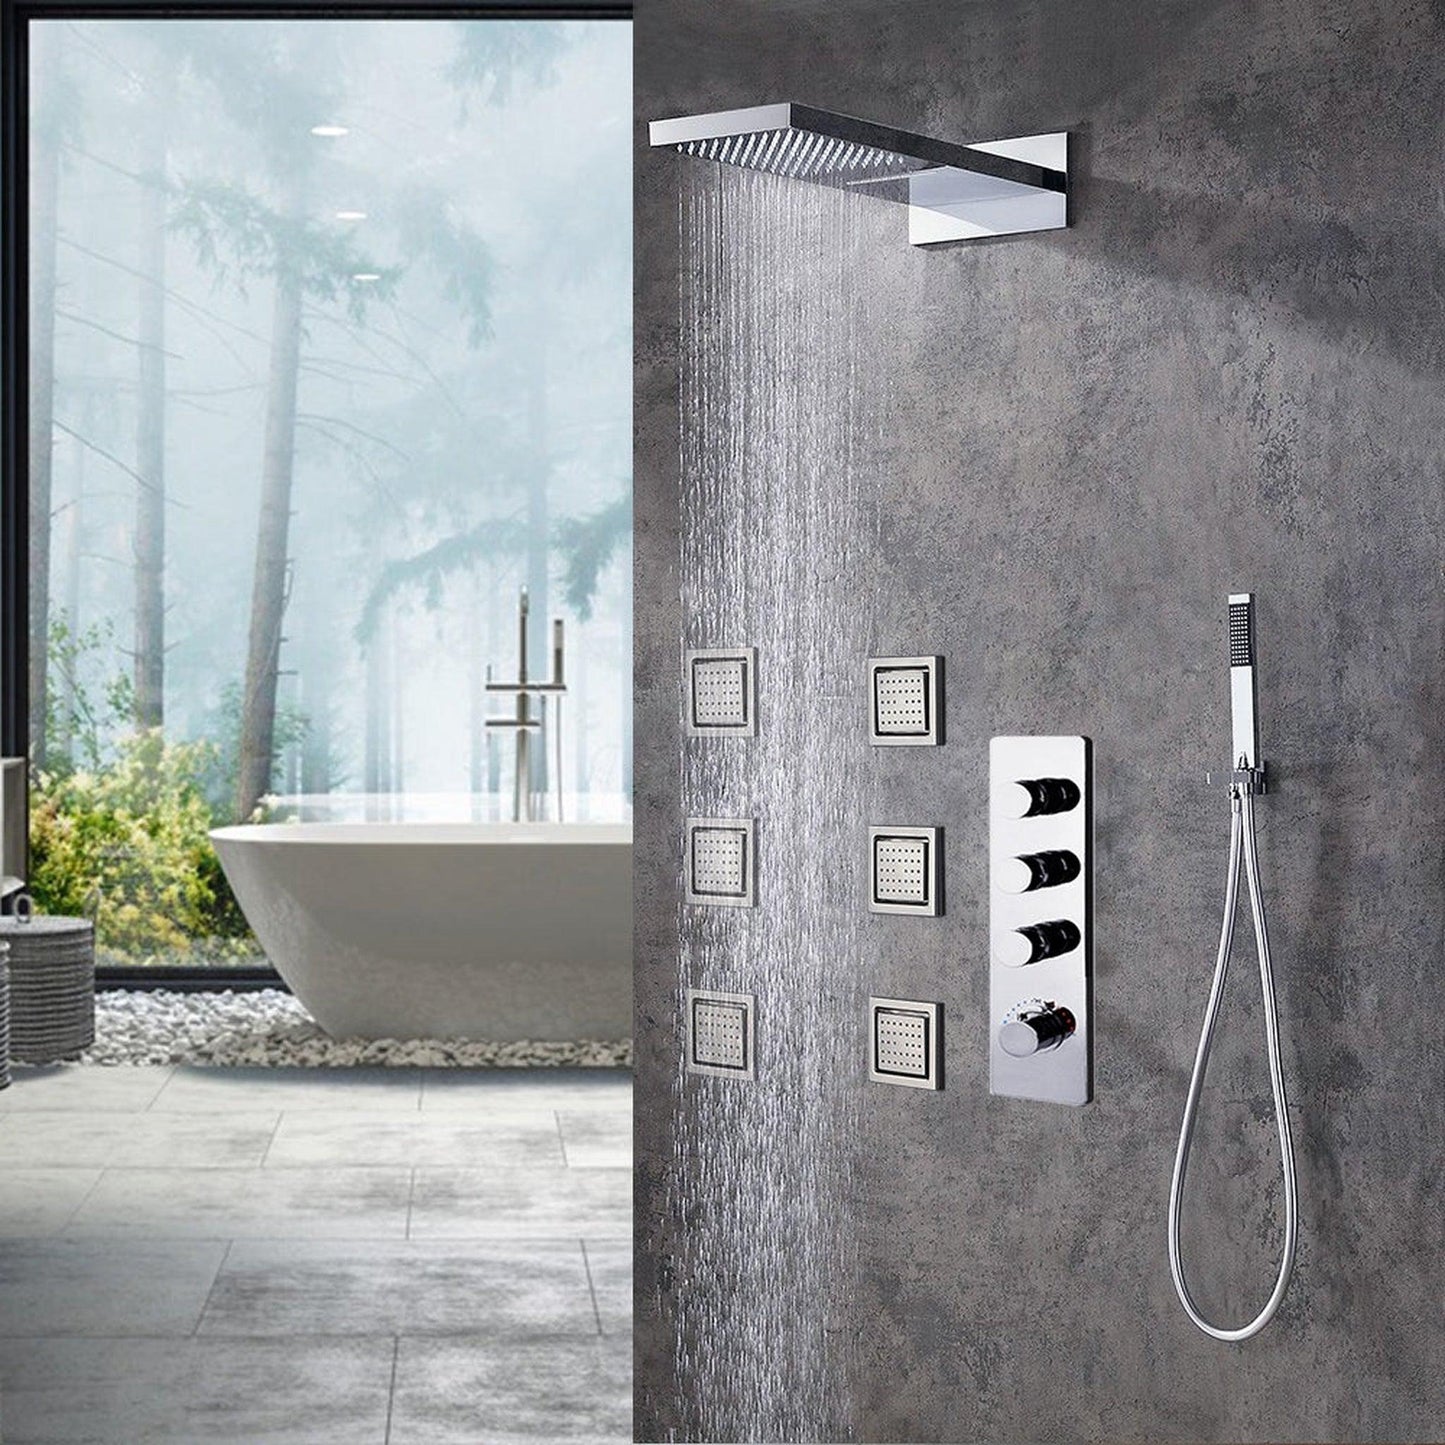 Fontana Brono Creative Luxury Chrome Wall-Mounted Shower Head Cascade & Rainfall Shower System With 6-Jet Massage Body Sprays and Hand Shower